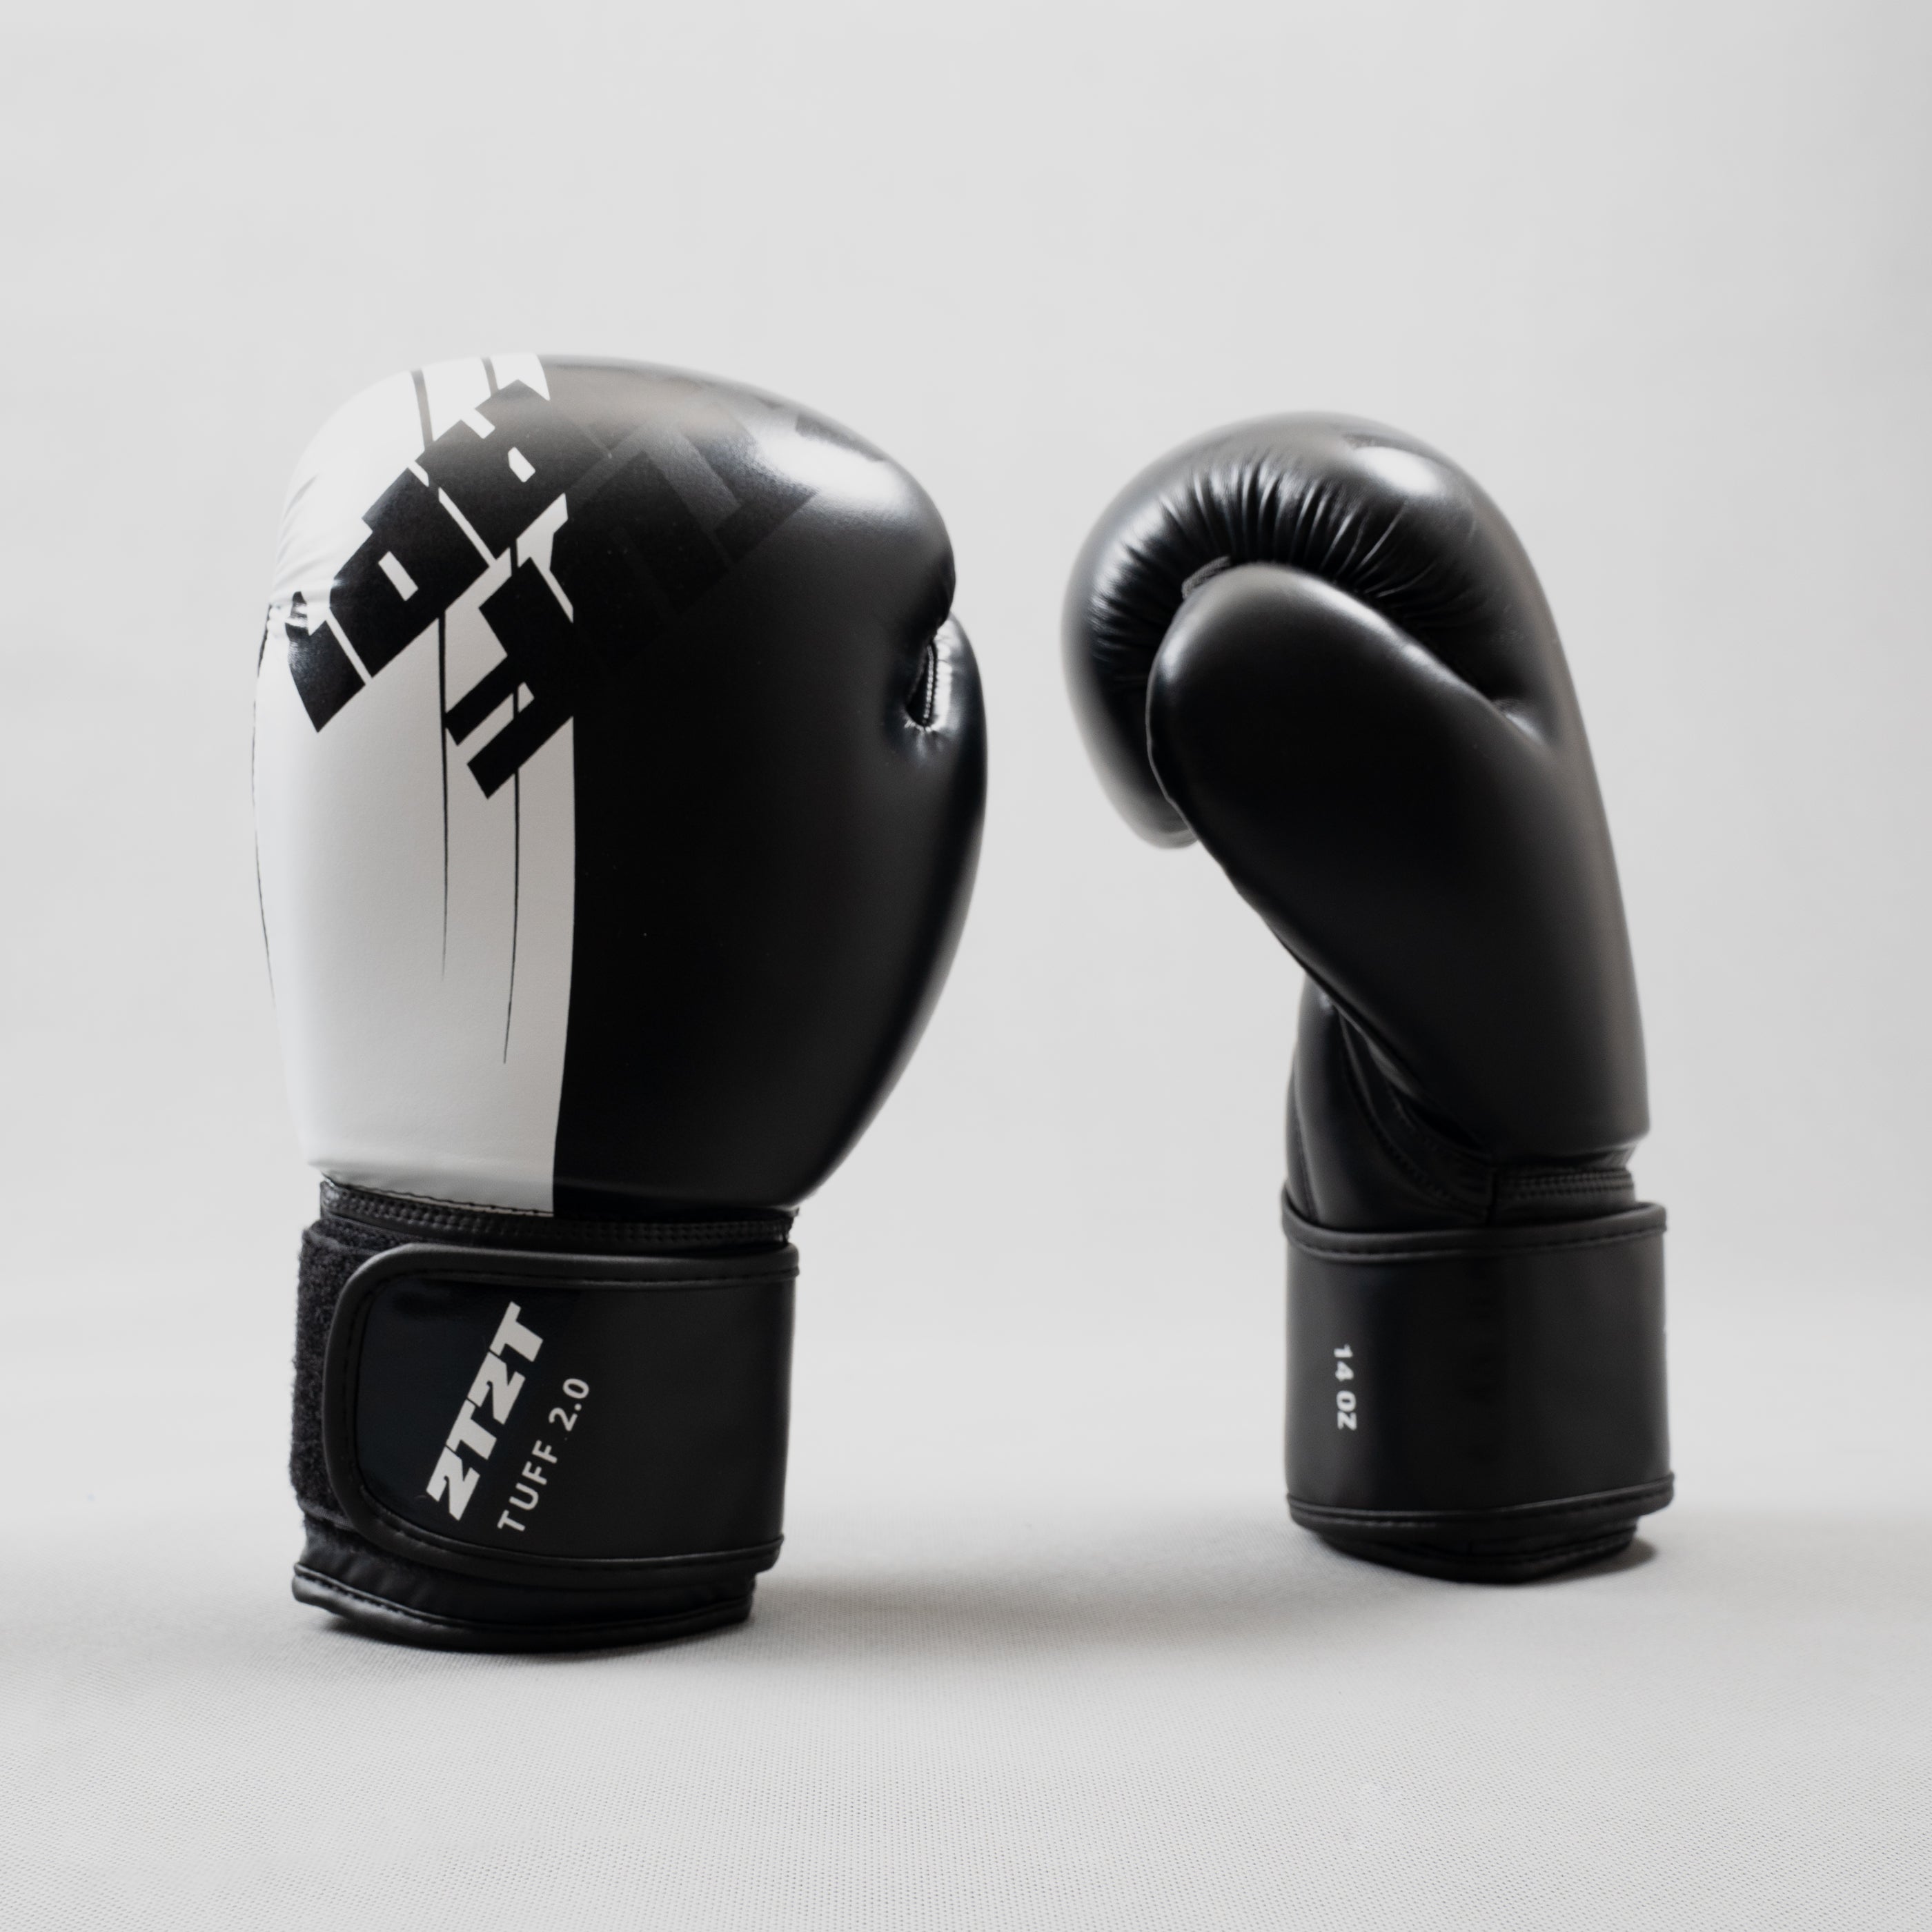 'Tuff 2.0' Boxing Gloves - White/Black